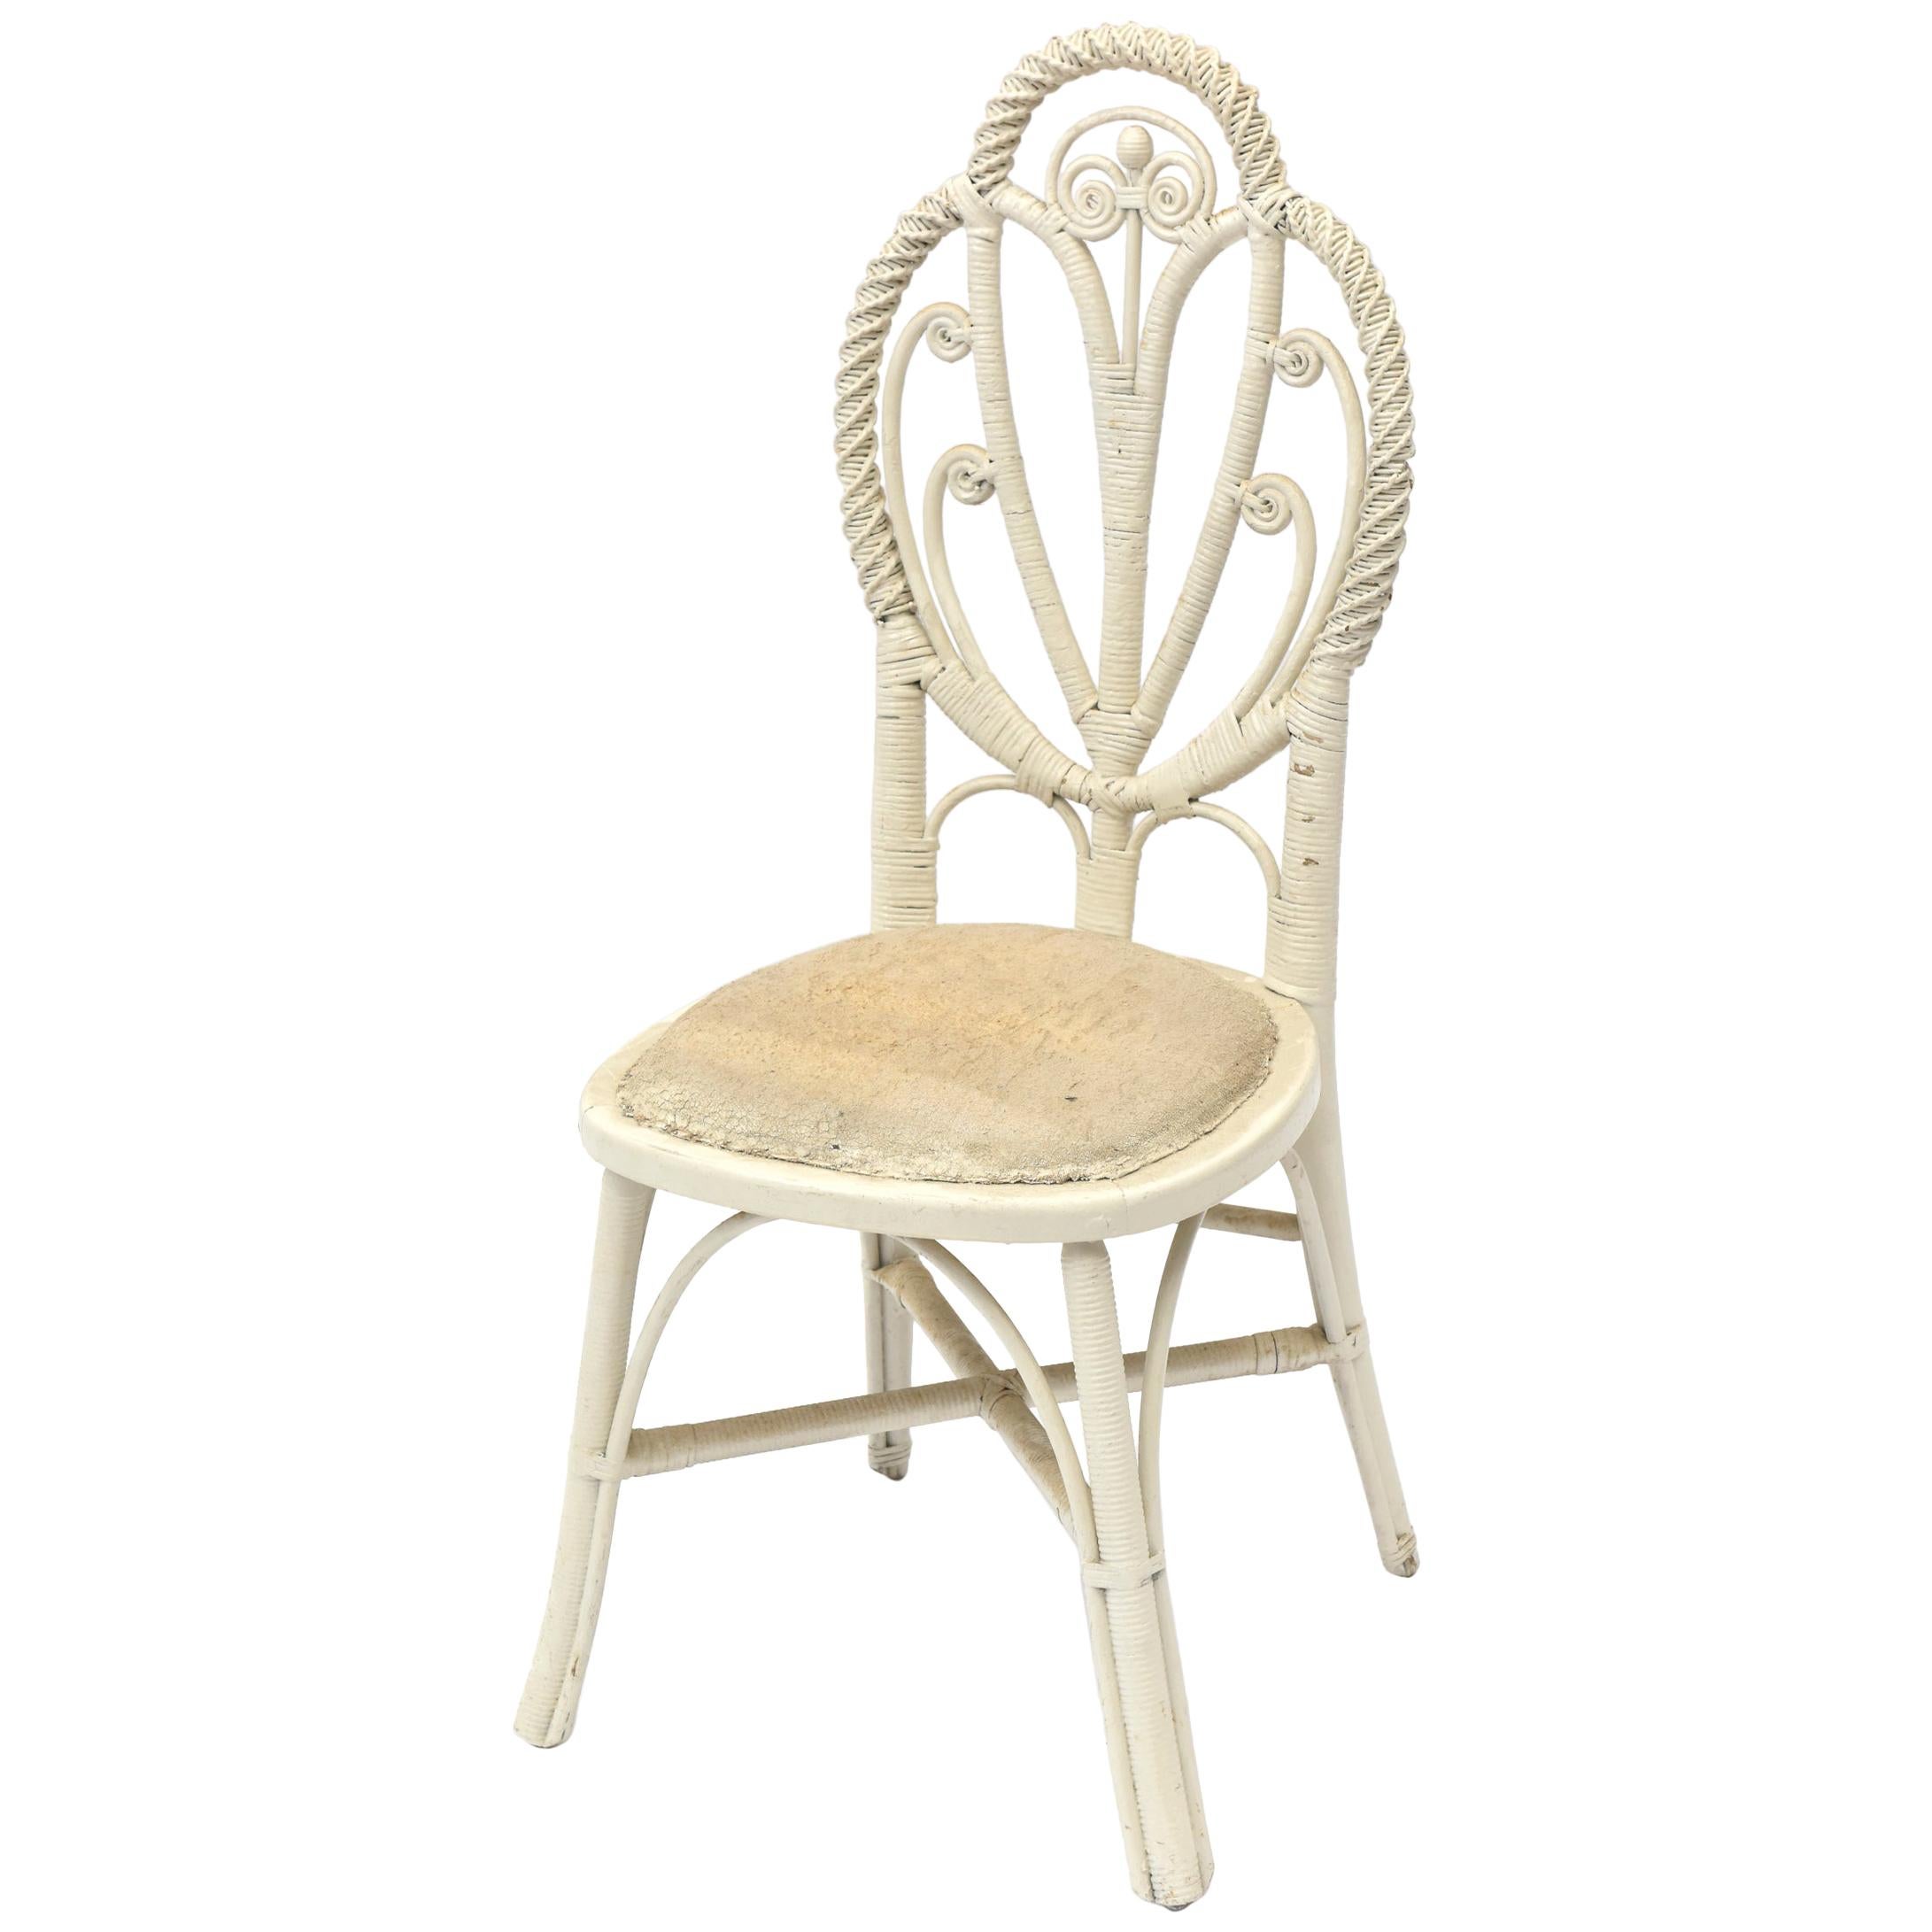 Antique Wicker Chair for Desk or Dresser